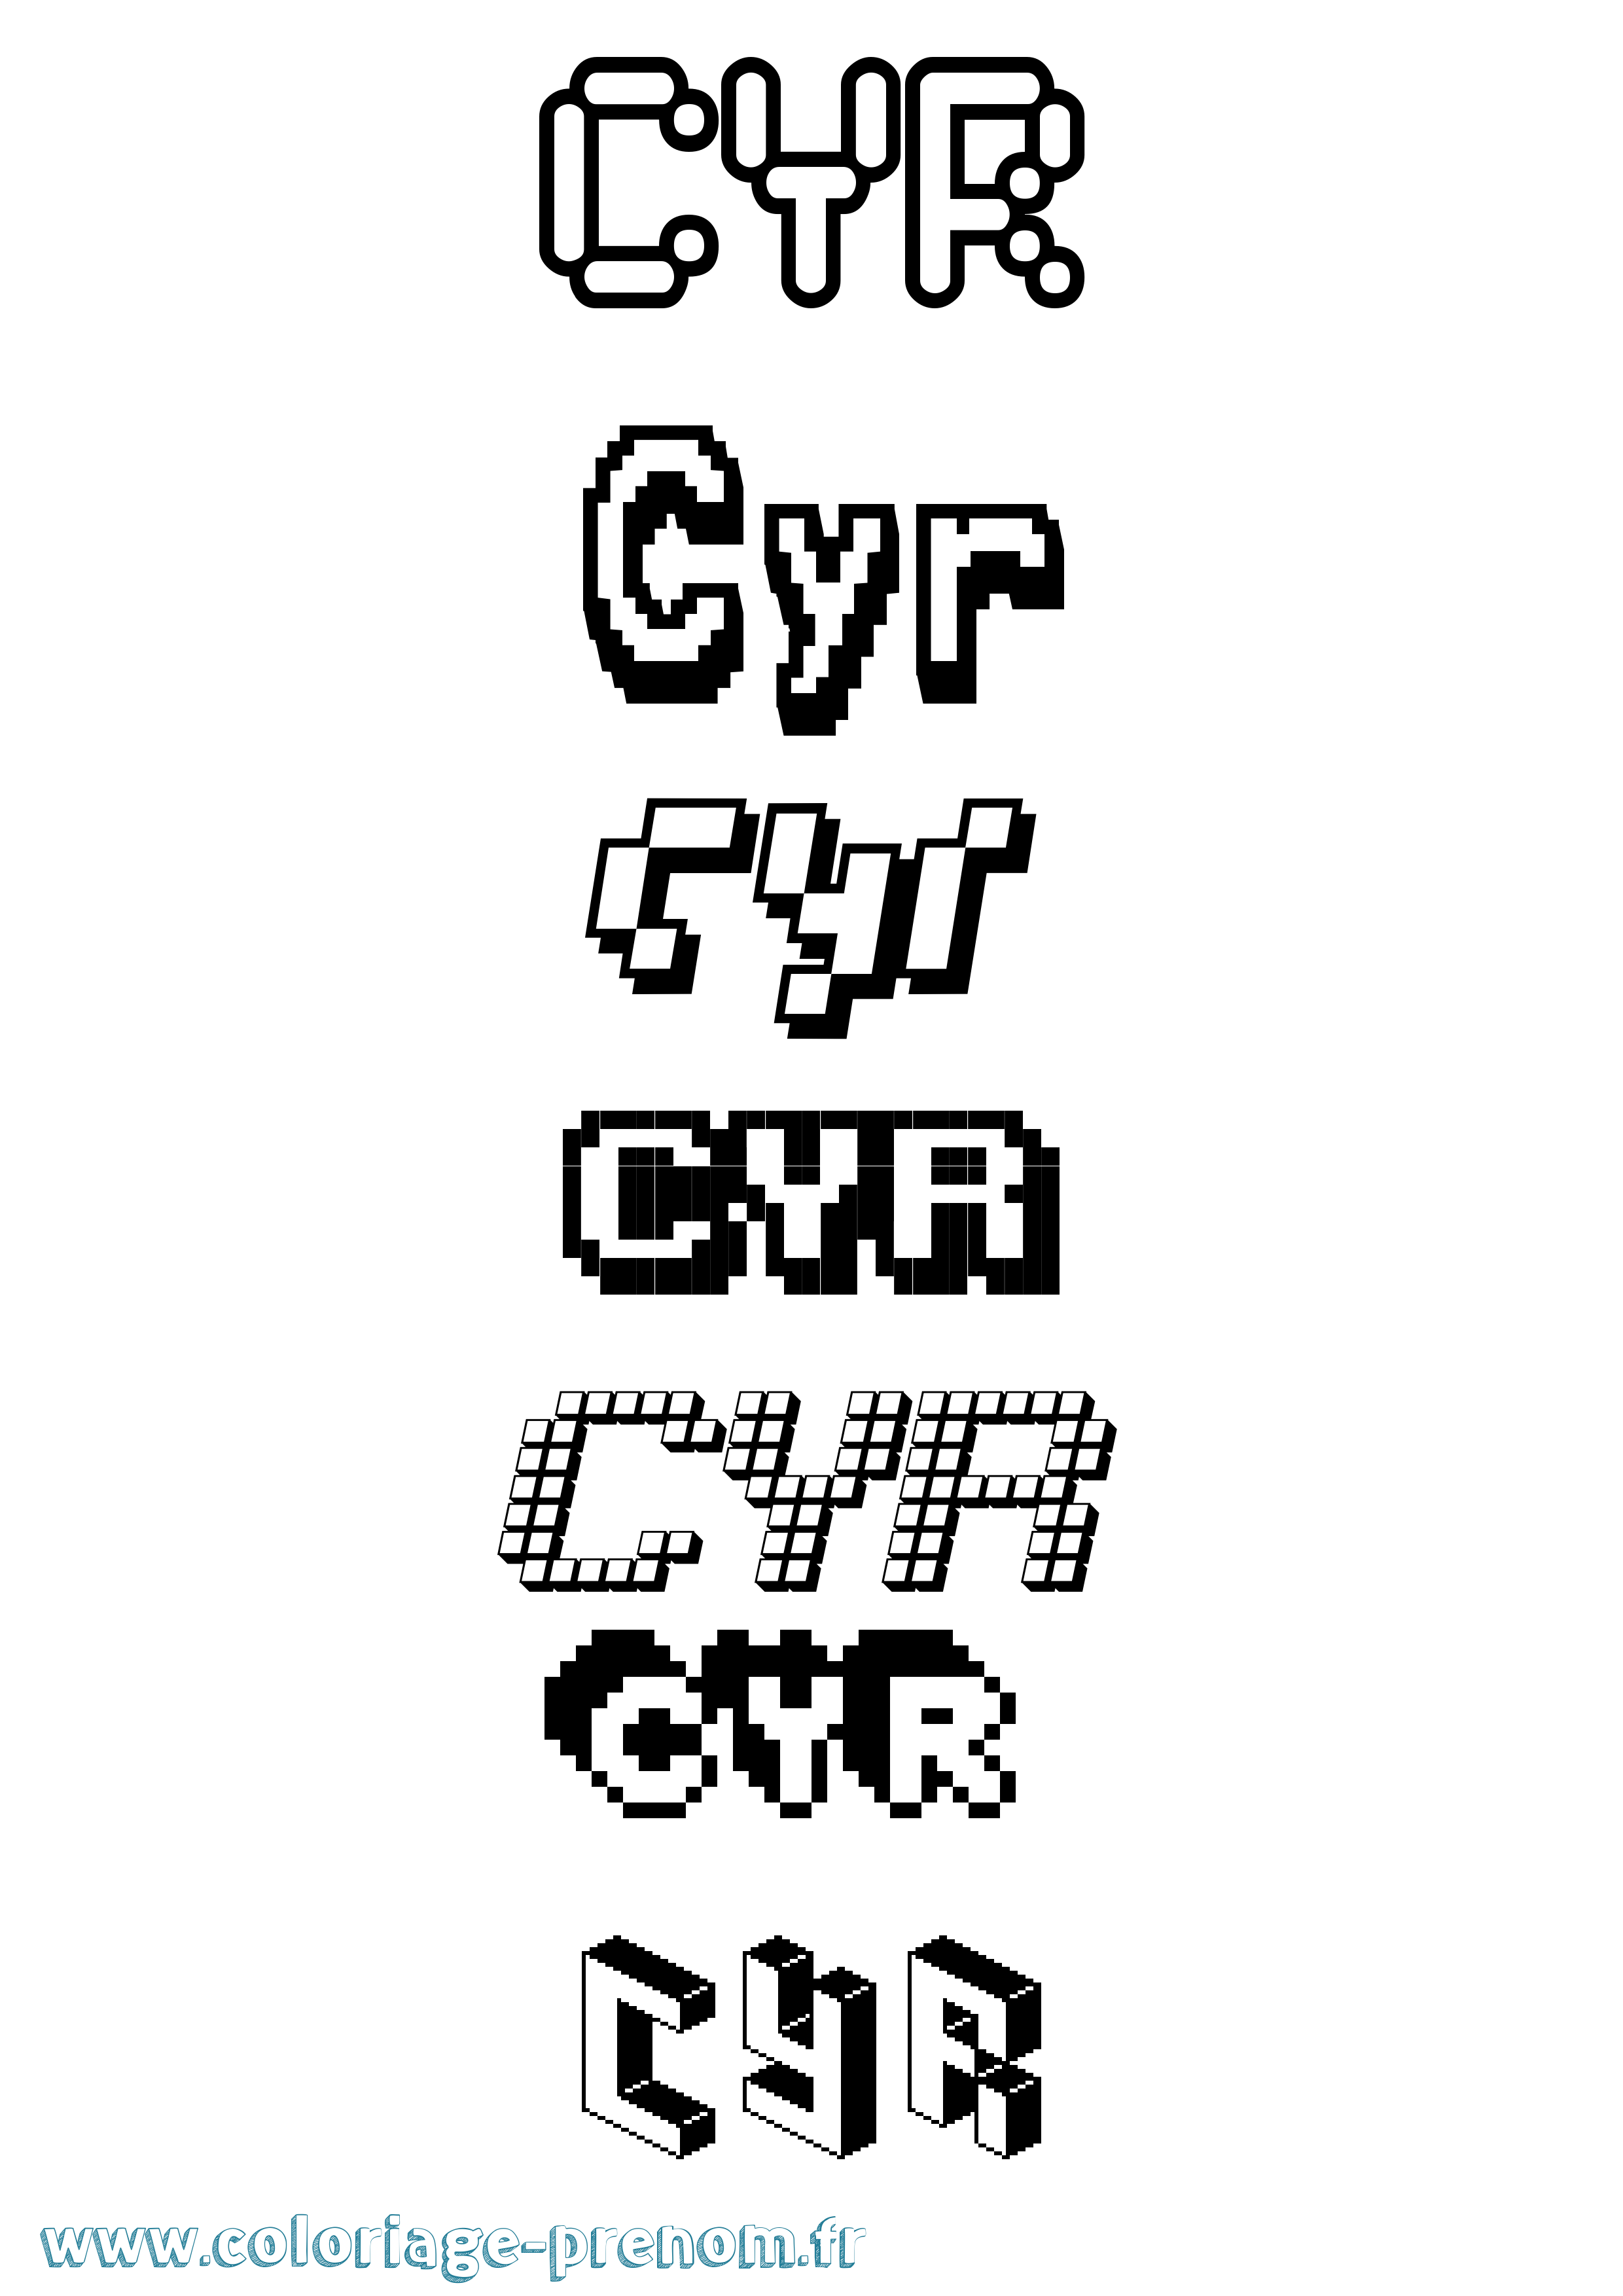 Coloriage prénom Cyr Pixel